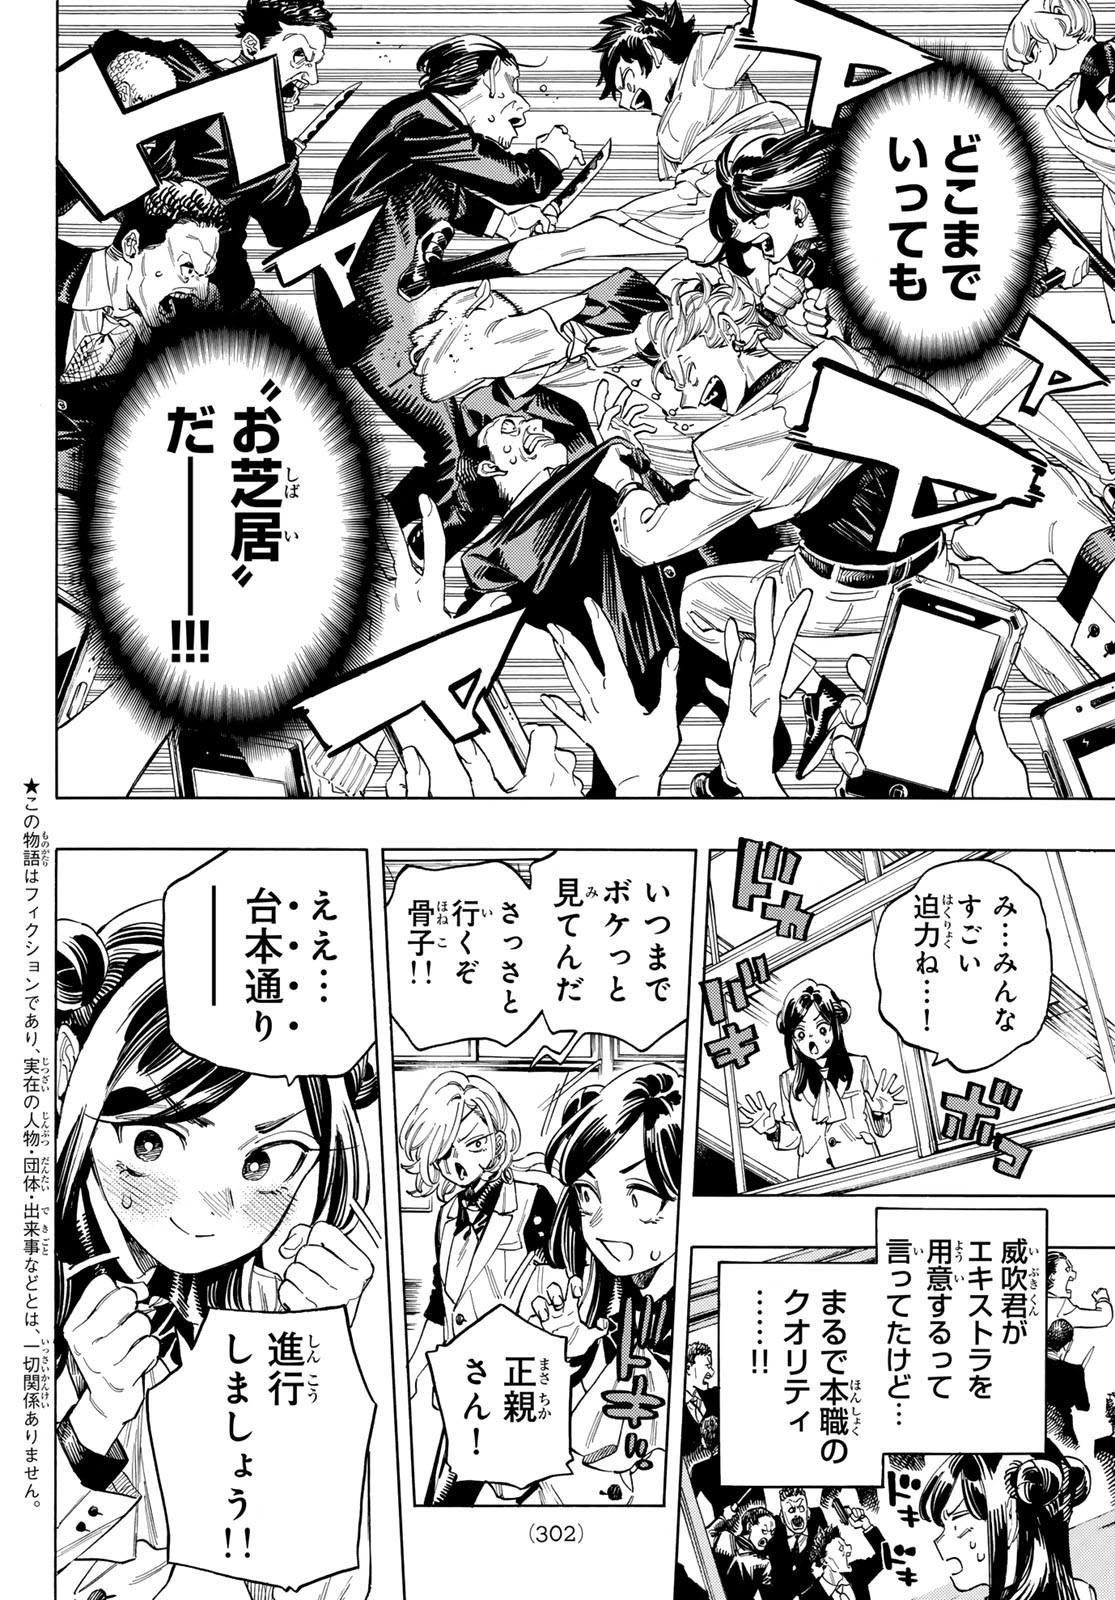 Akabane Honeko no Bodyguard - Chapter 59 - Page 2